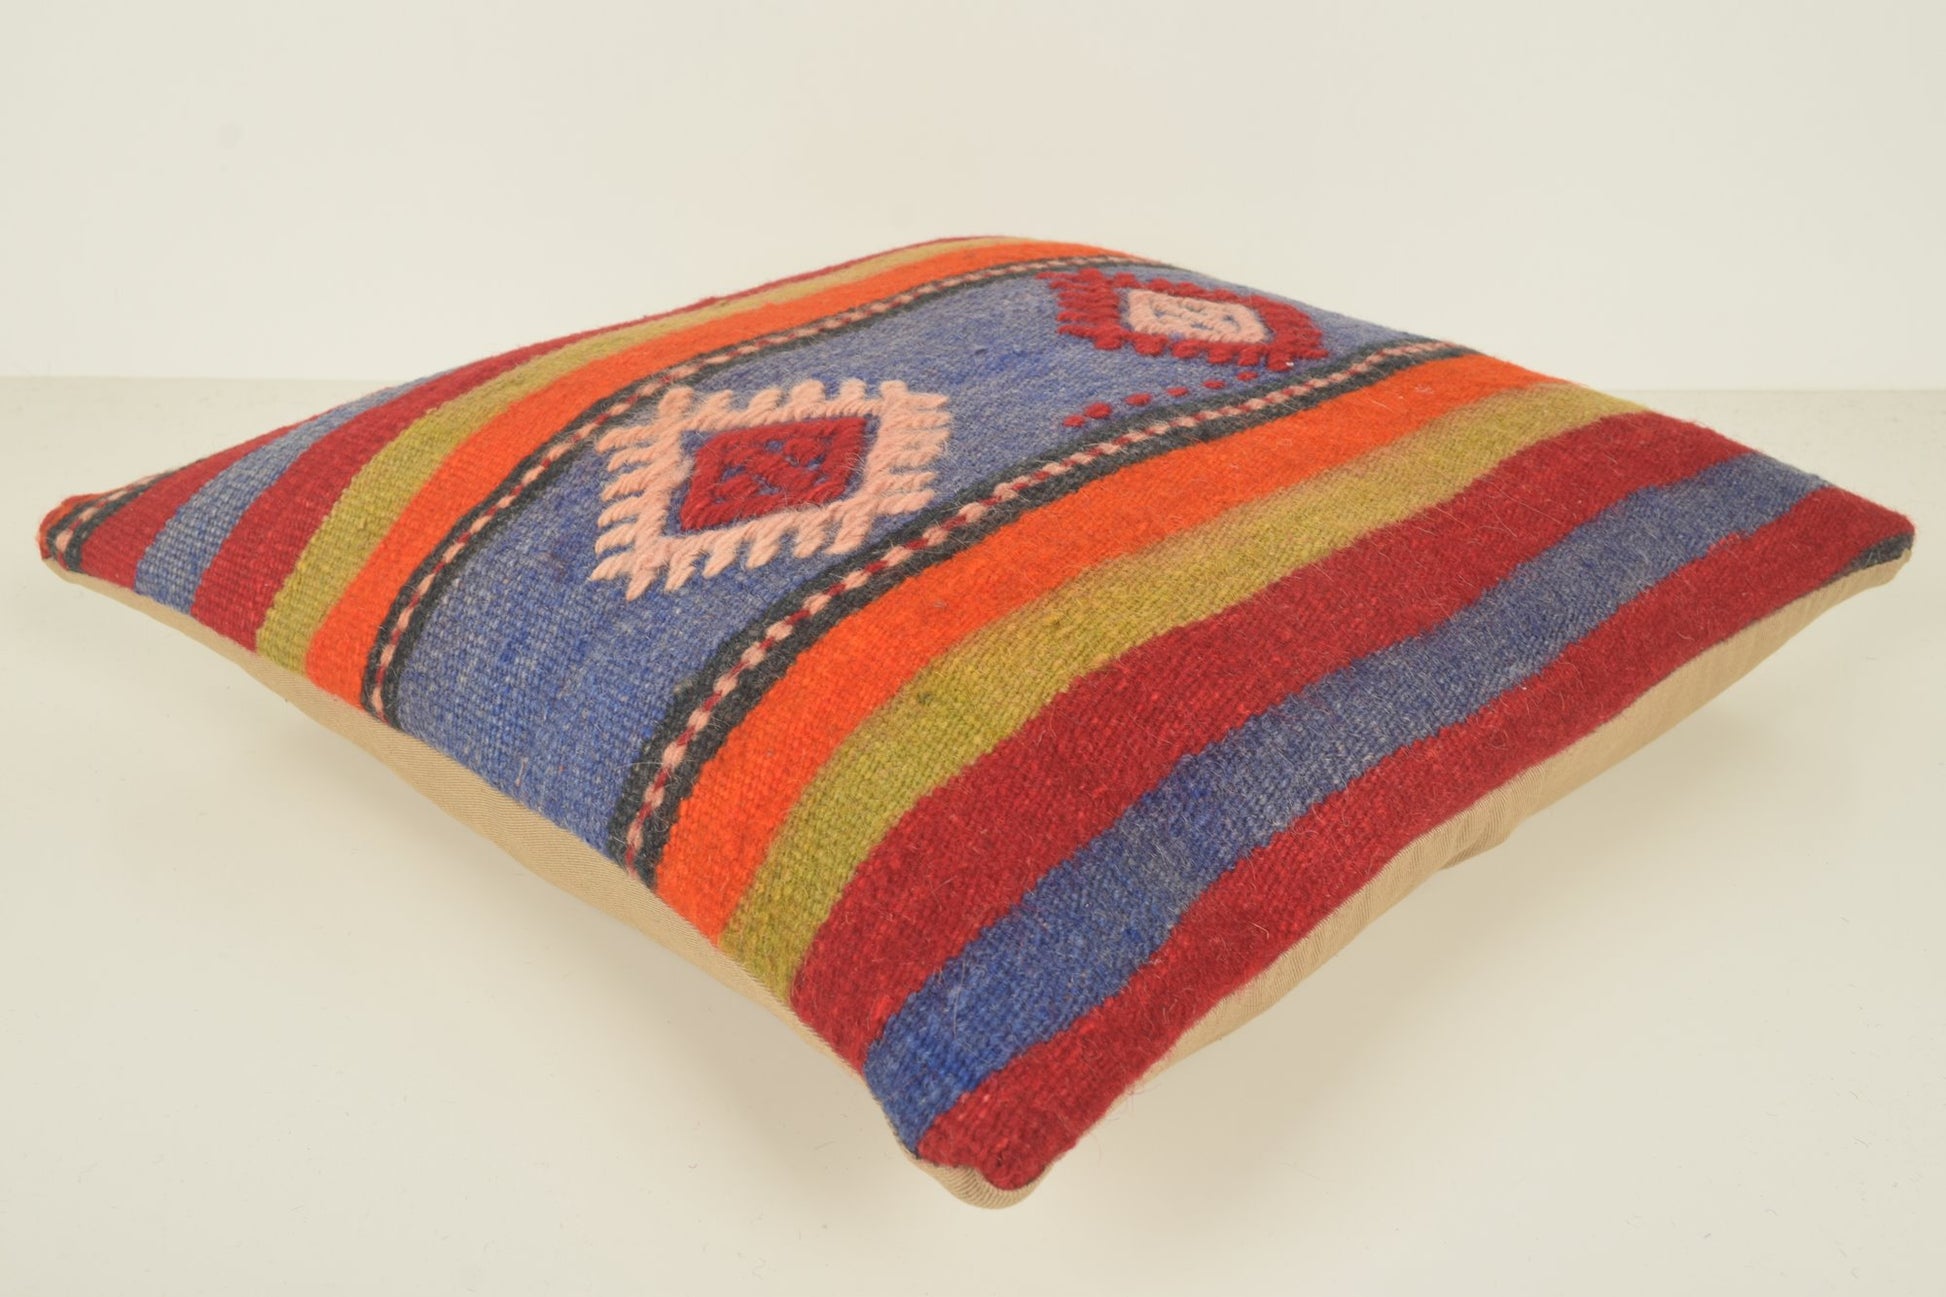 Small Kilim Pillow C01455 18x18 Economic African Needlepoint